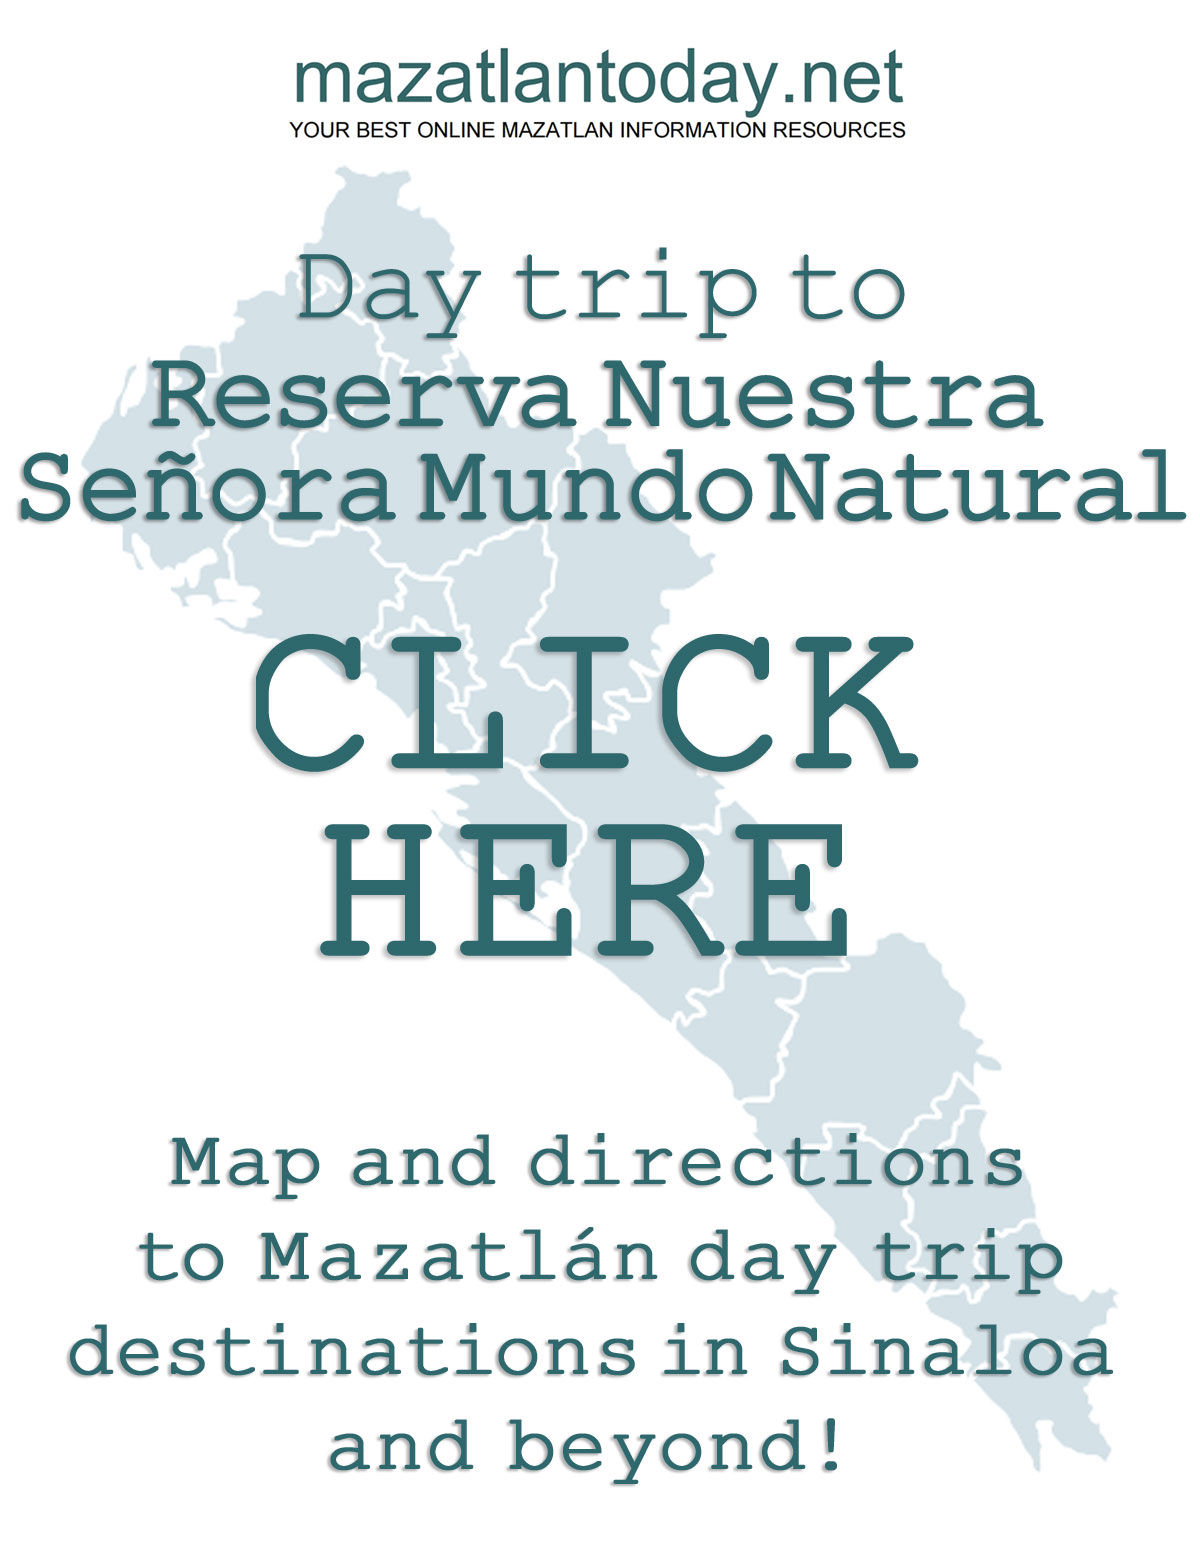 Download free Mazatlan - Reserva Nuestra Senora Mundo Natural day trip map and directions